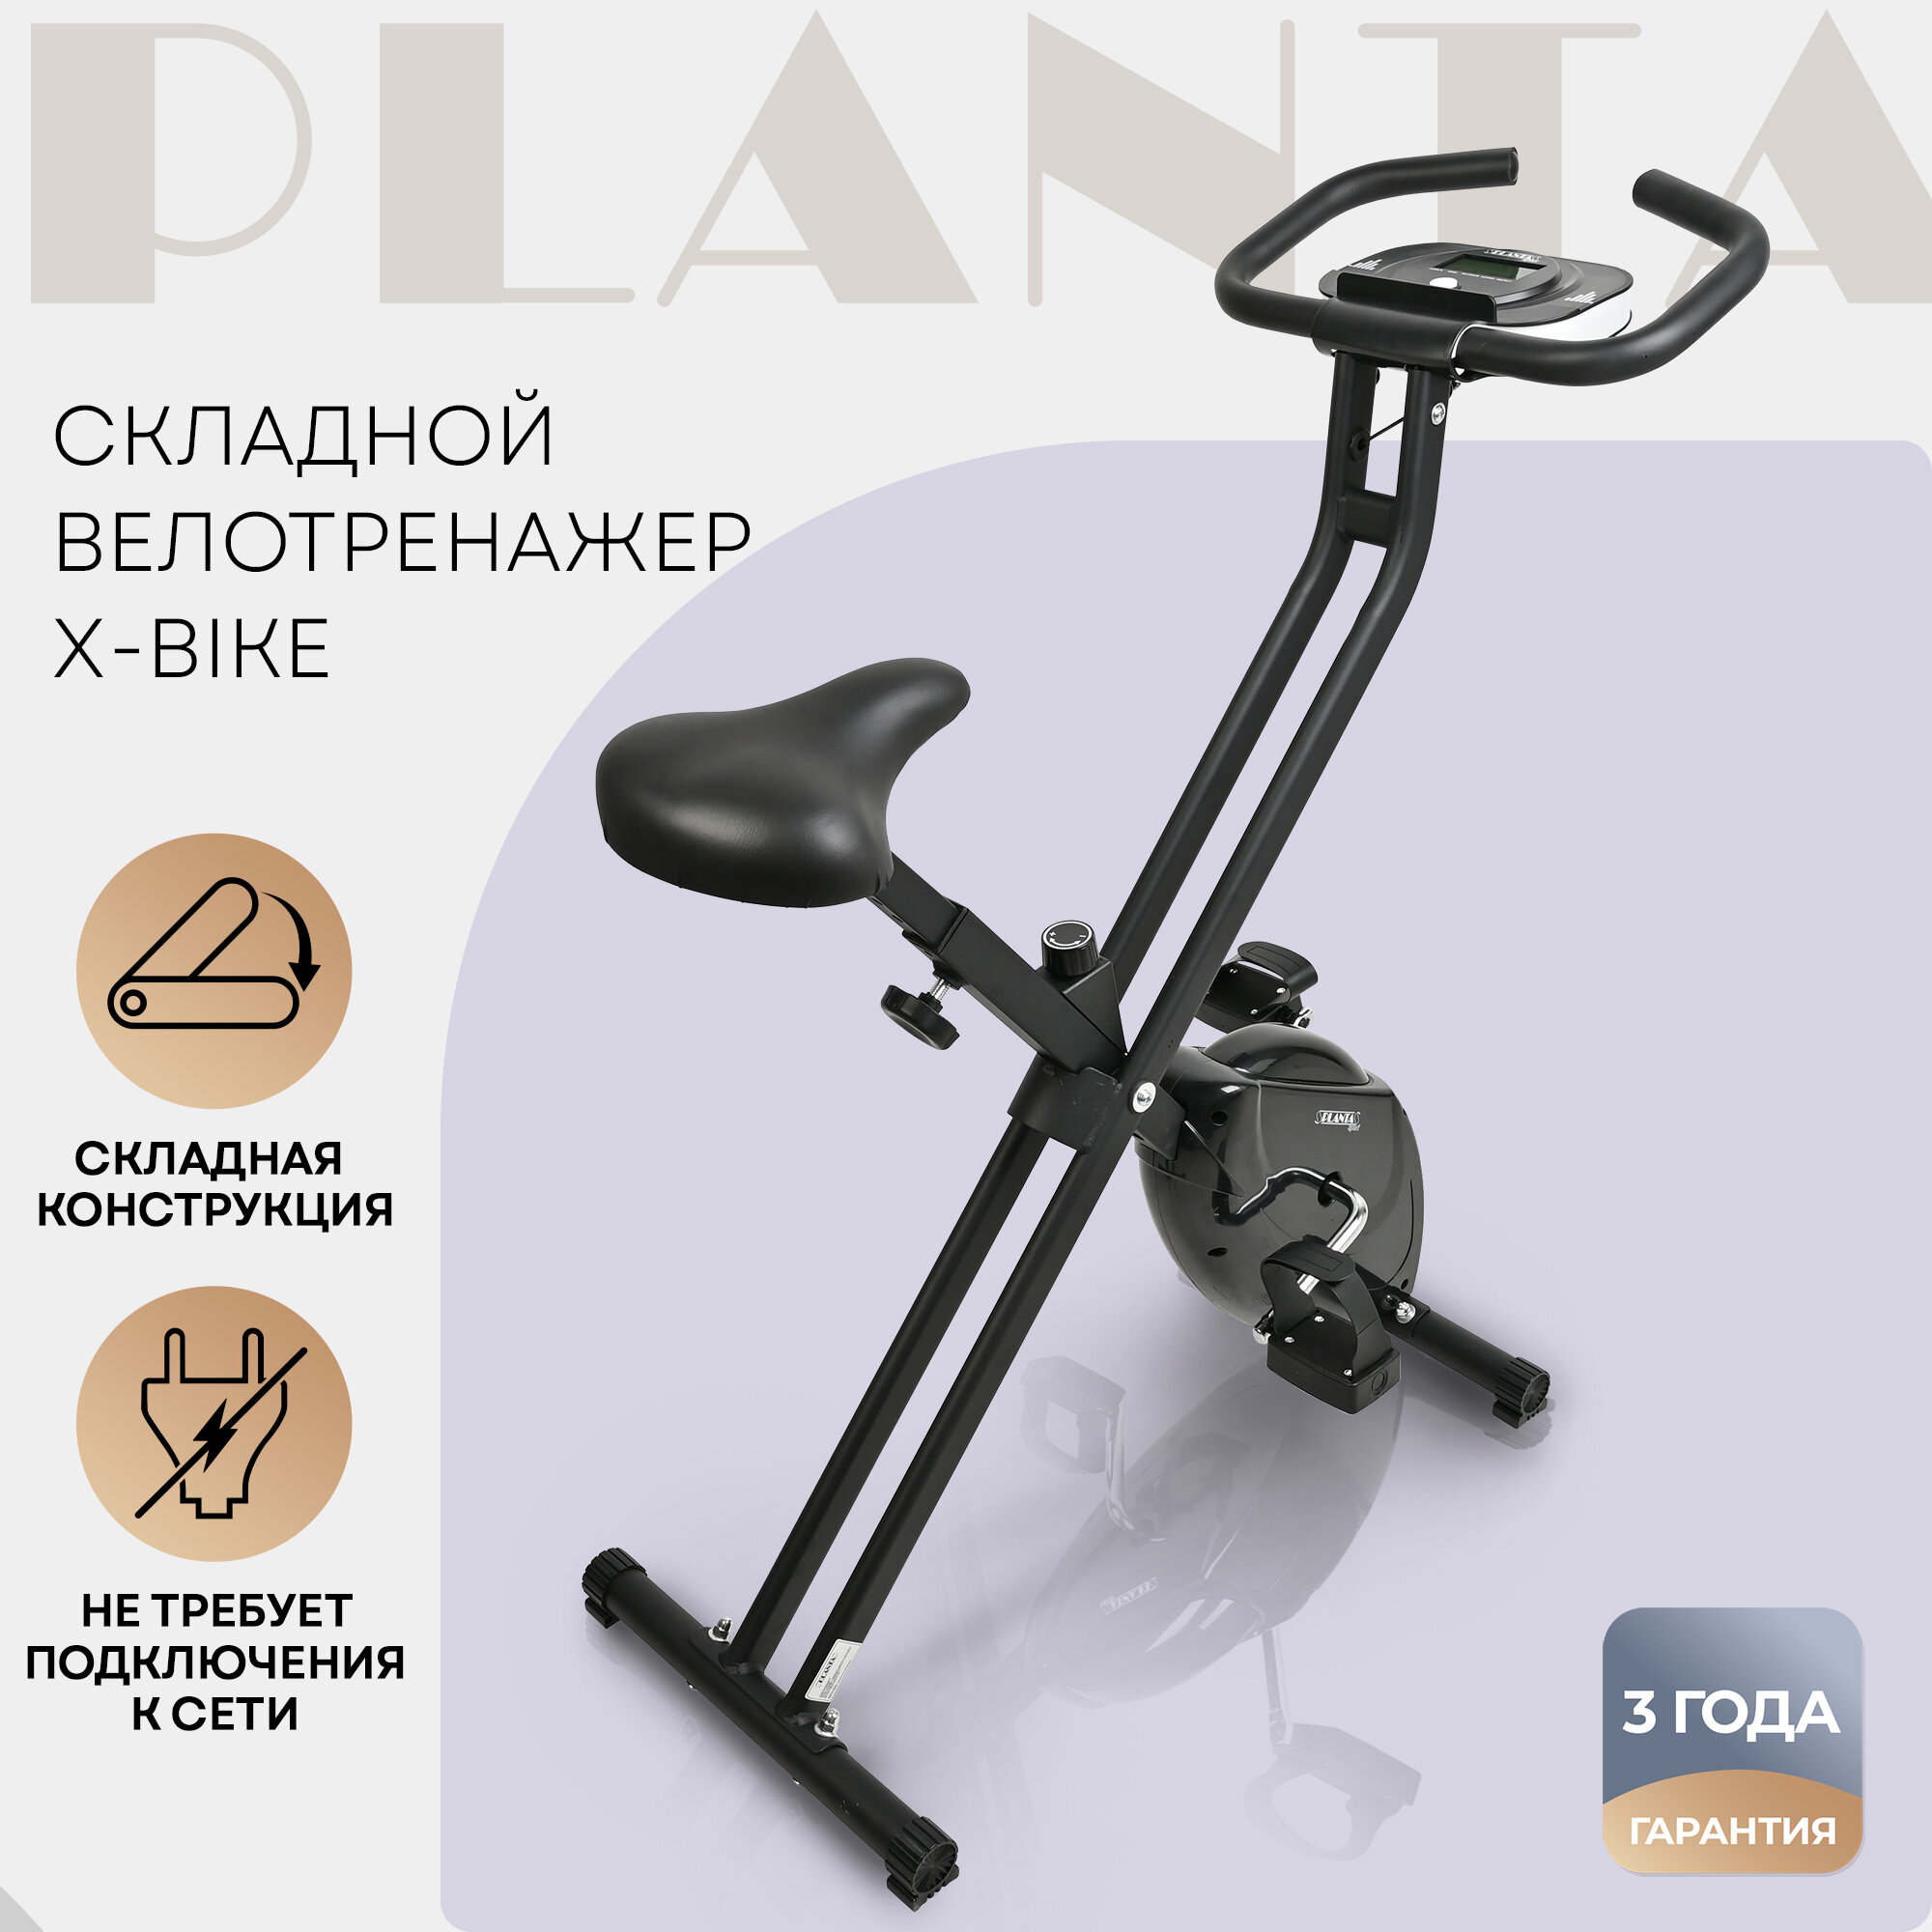 PLANTA Складной велотренажер для дома FD-BIKE-005 тренажер для похудения мини велотренажер